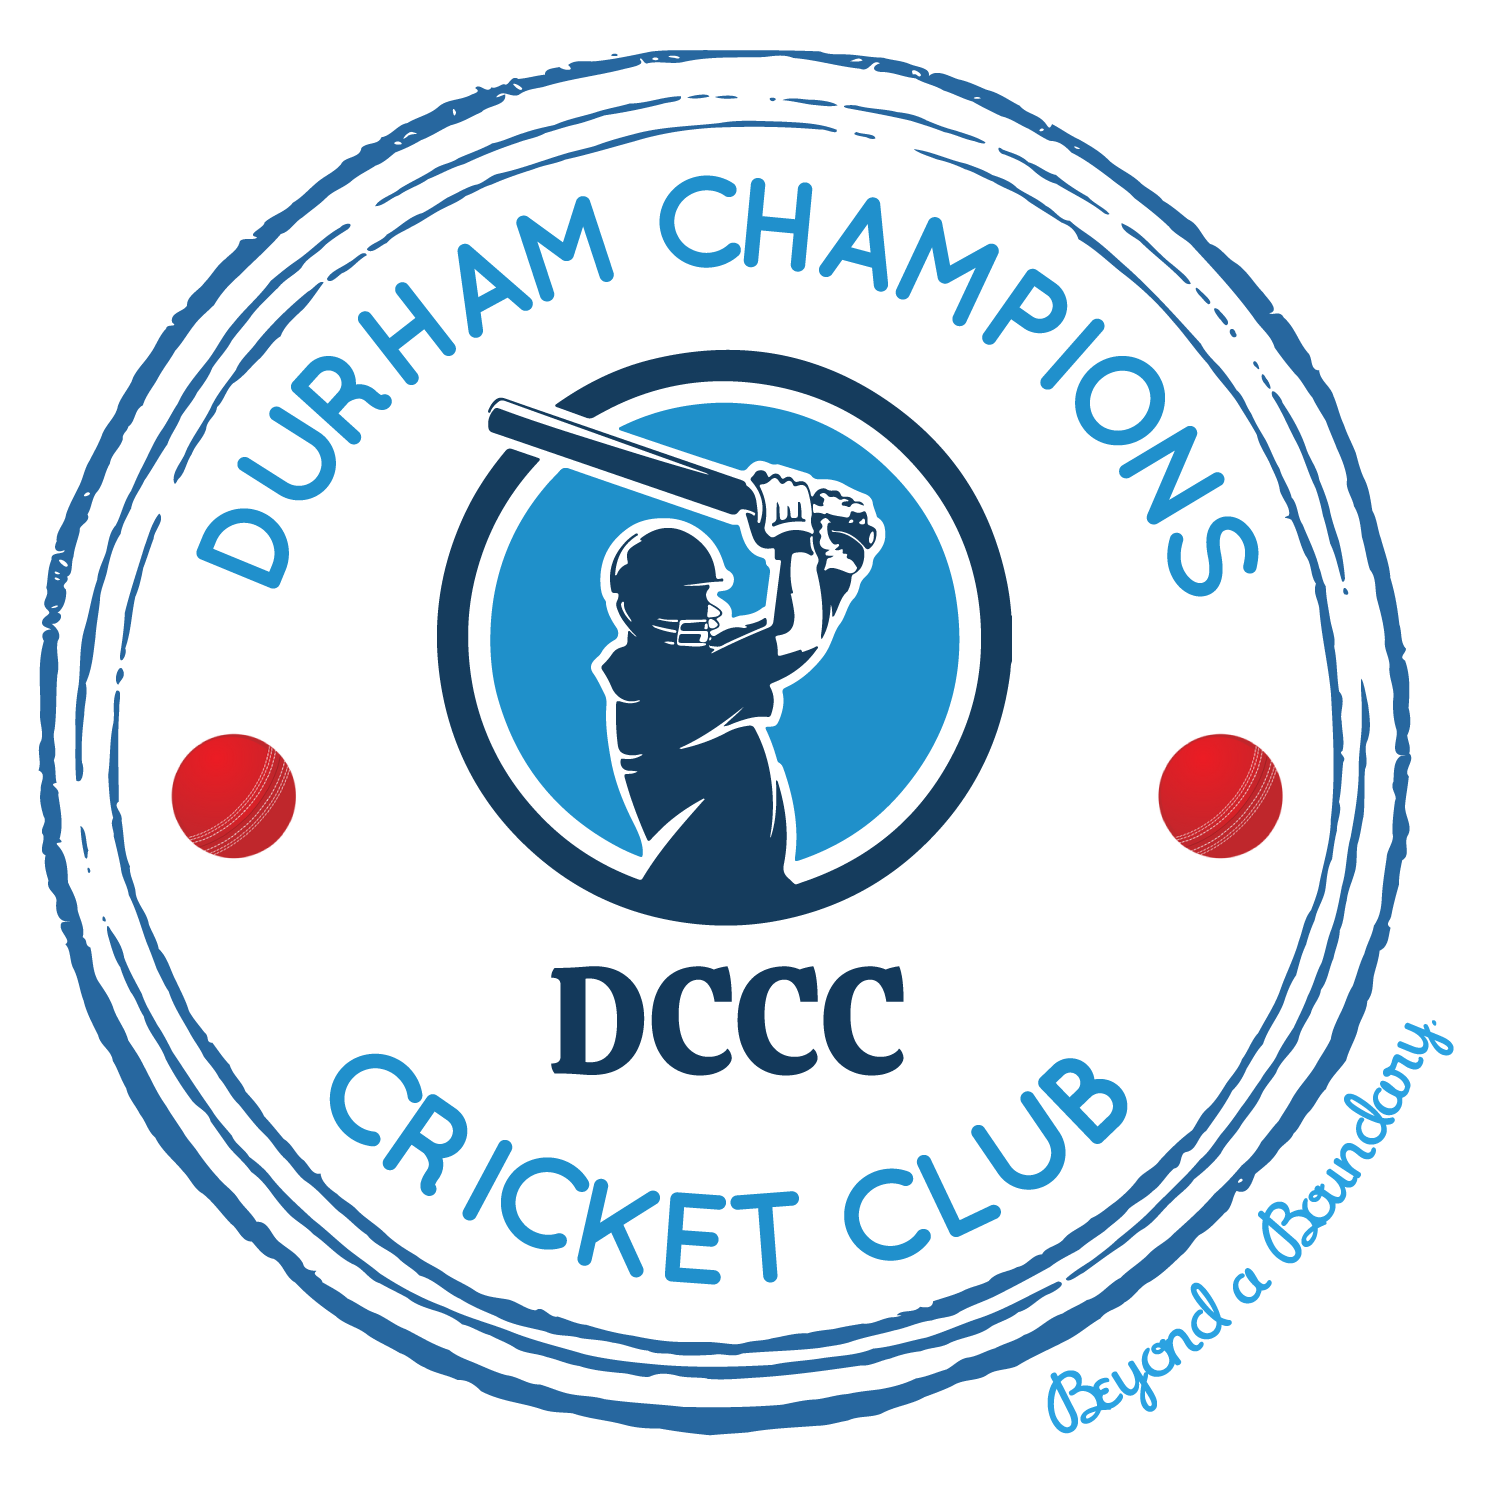 Durham Champions Cricket Club